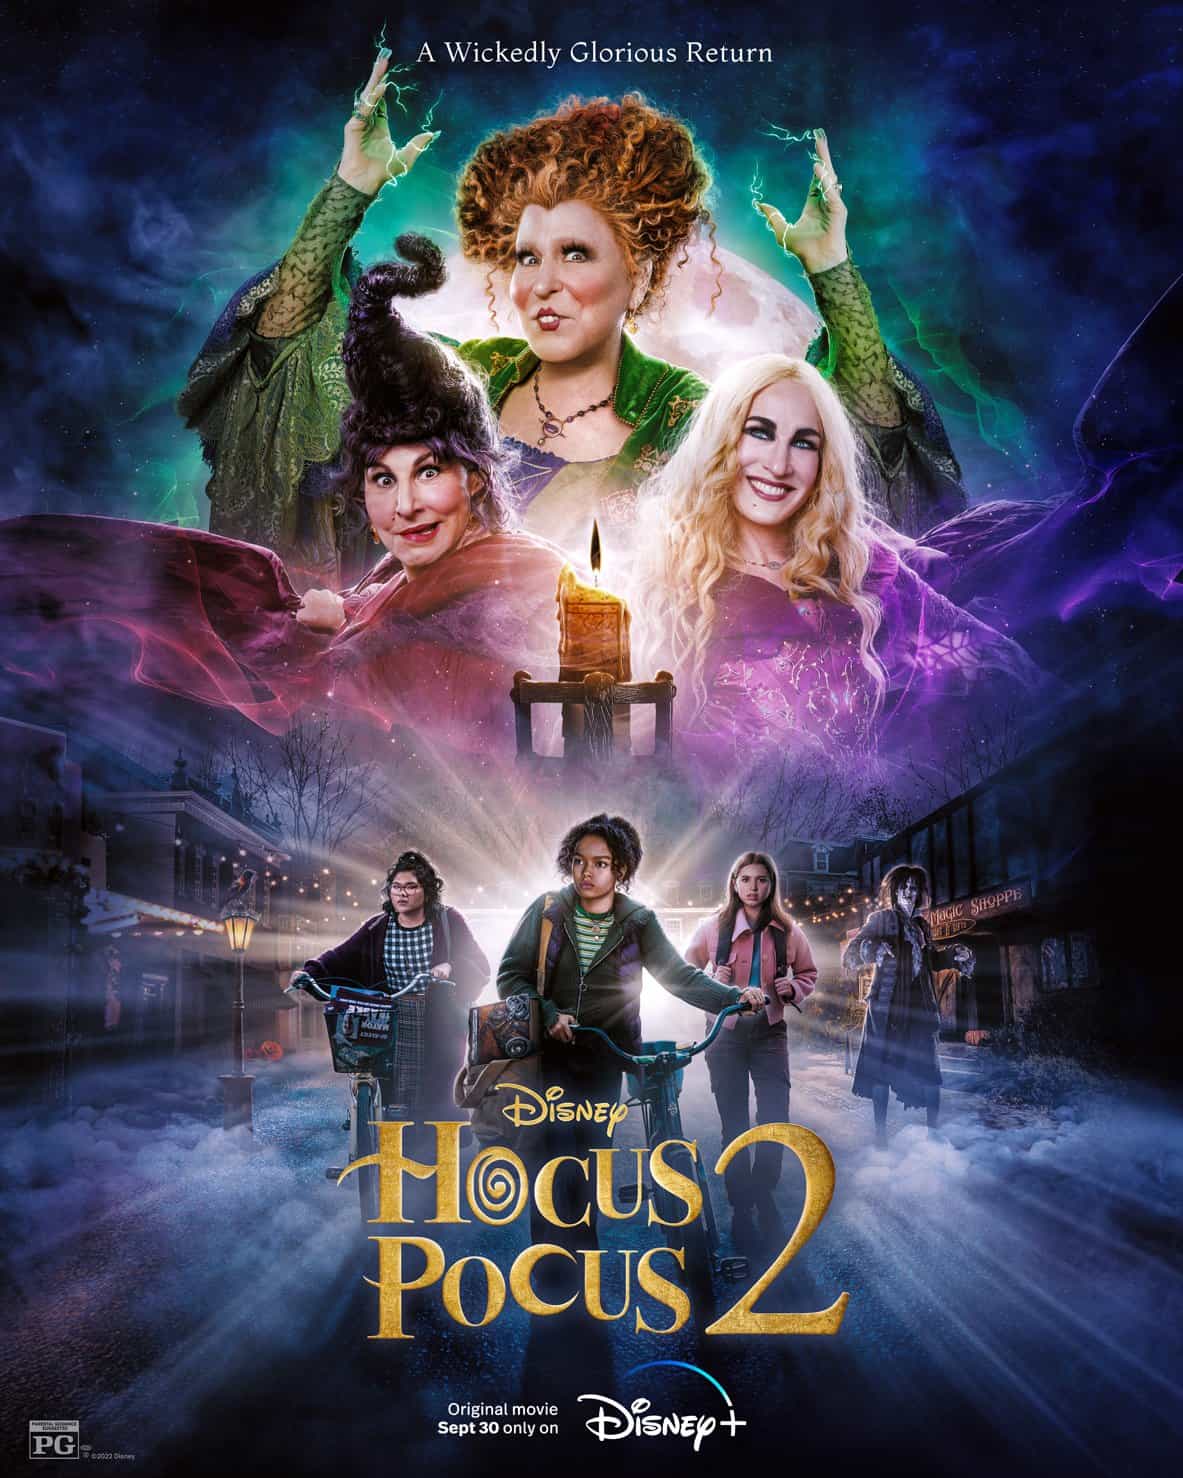 Hocus Pocus 2 becomes the biggest film premier on the Disney+ platform so far